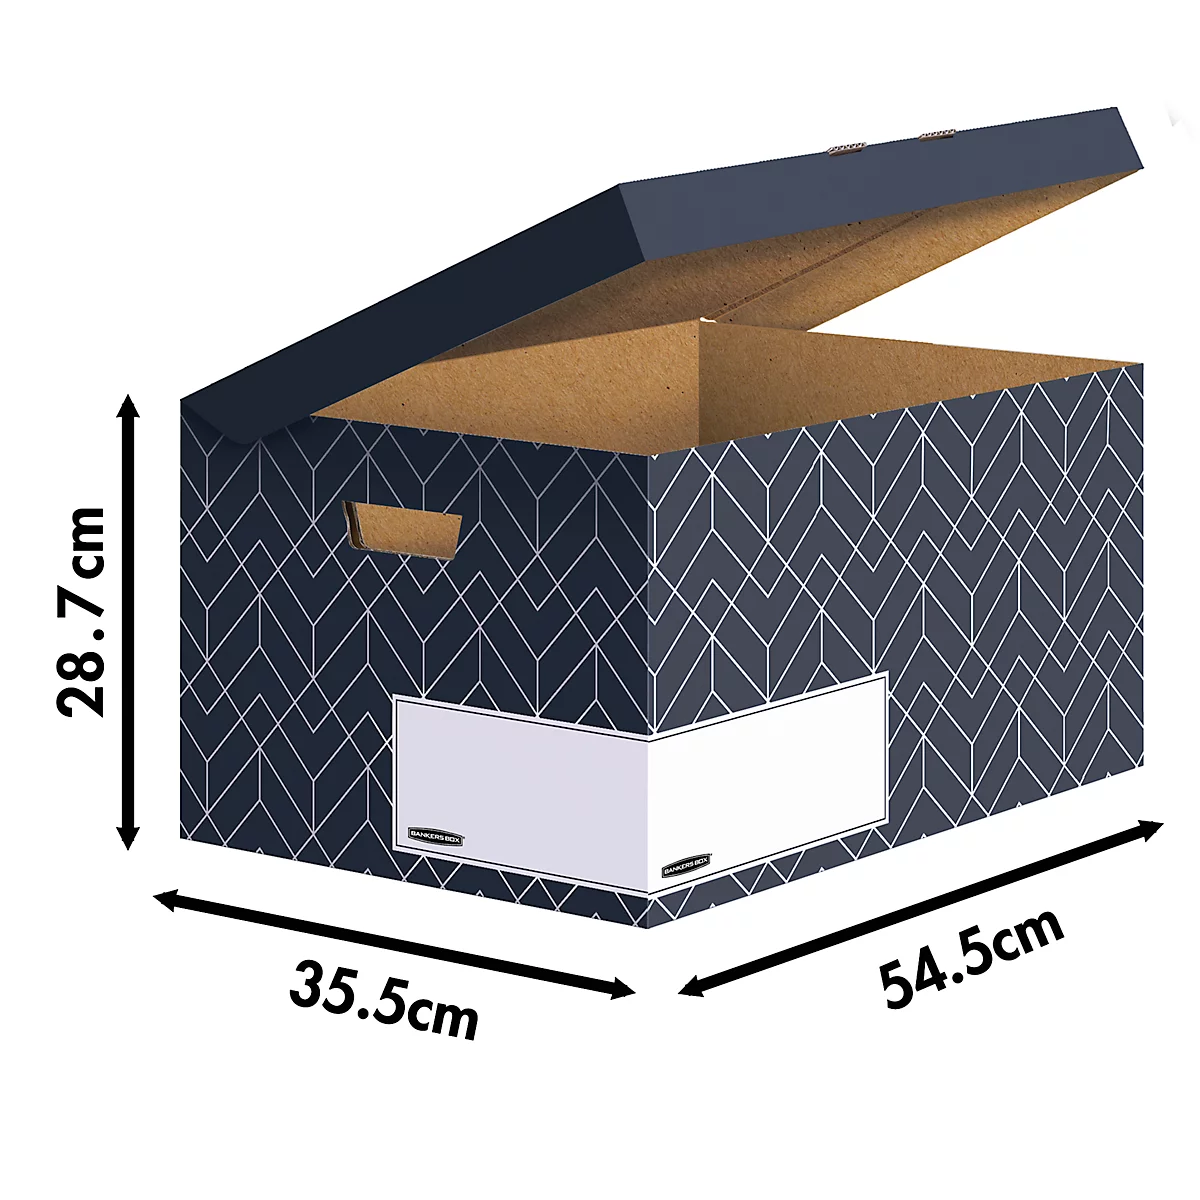 Klappdeckelbox Maxi BANKERS BOX® Décor, FSC®-zertifizierter Karton, L 570 x B 367 x H 291 mm, für DIN A4 Formate, mitternachtsblau, 5 Stück